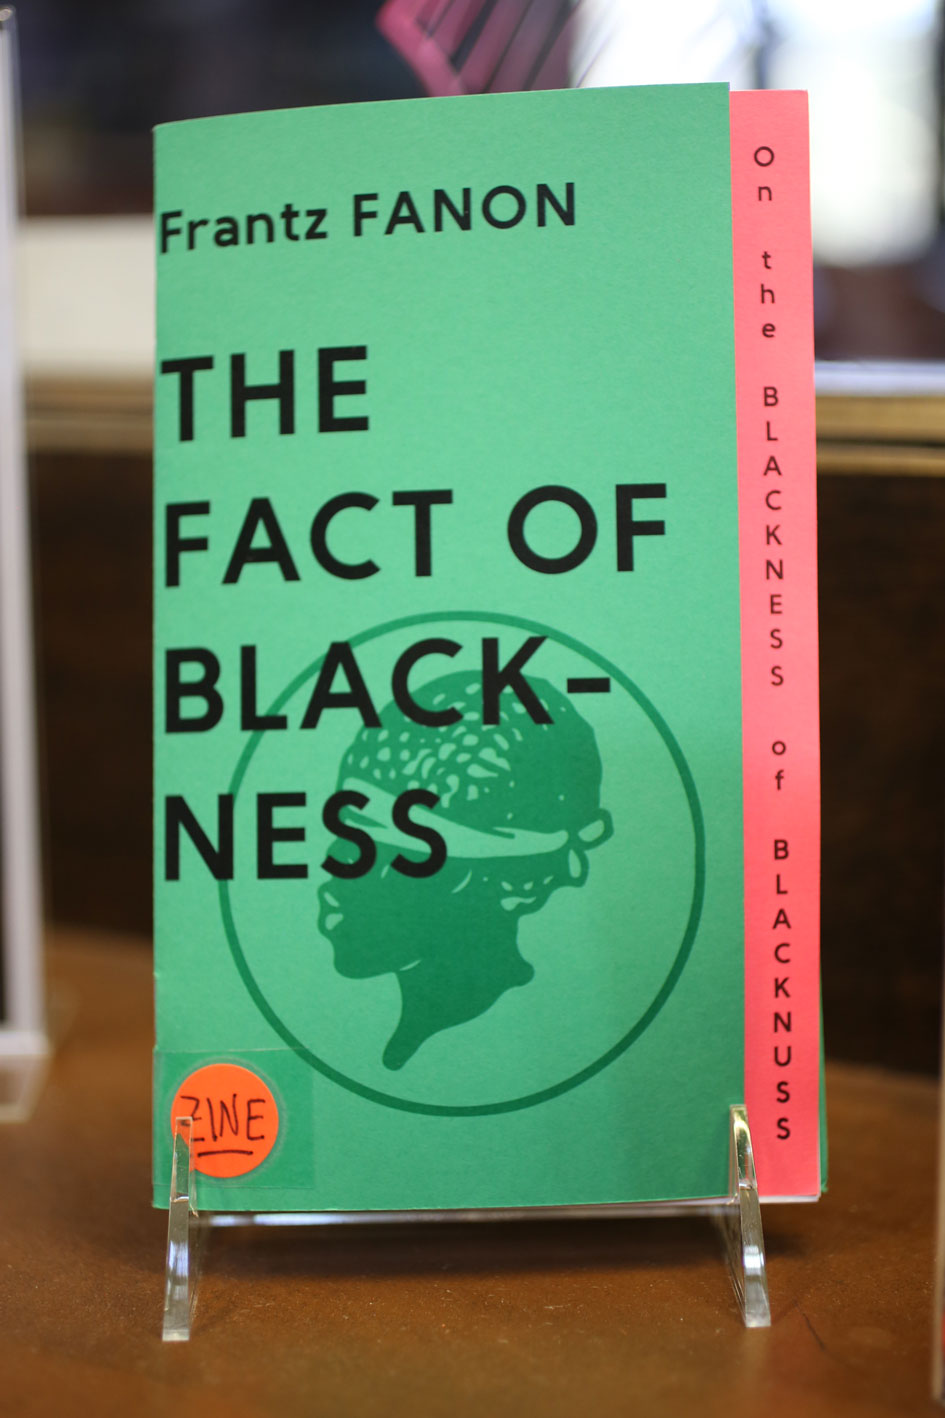 On the Blackness of Blacknuss zine